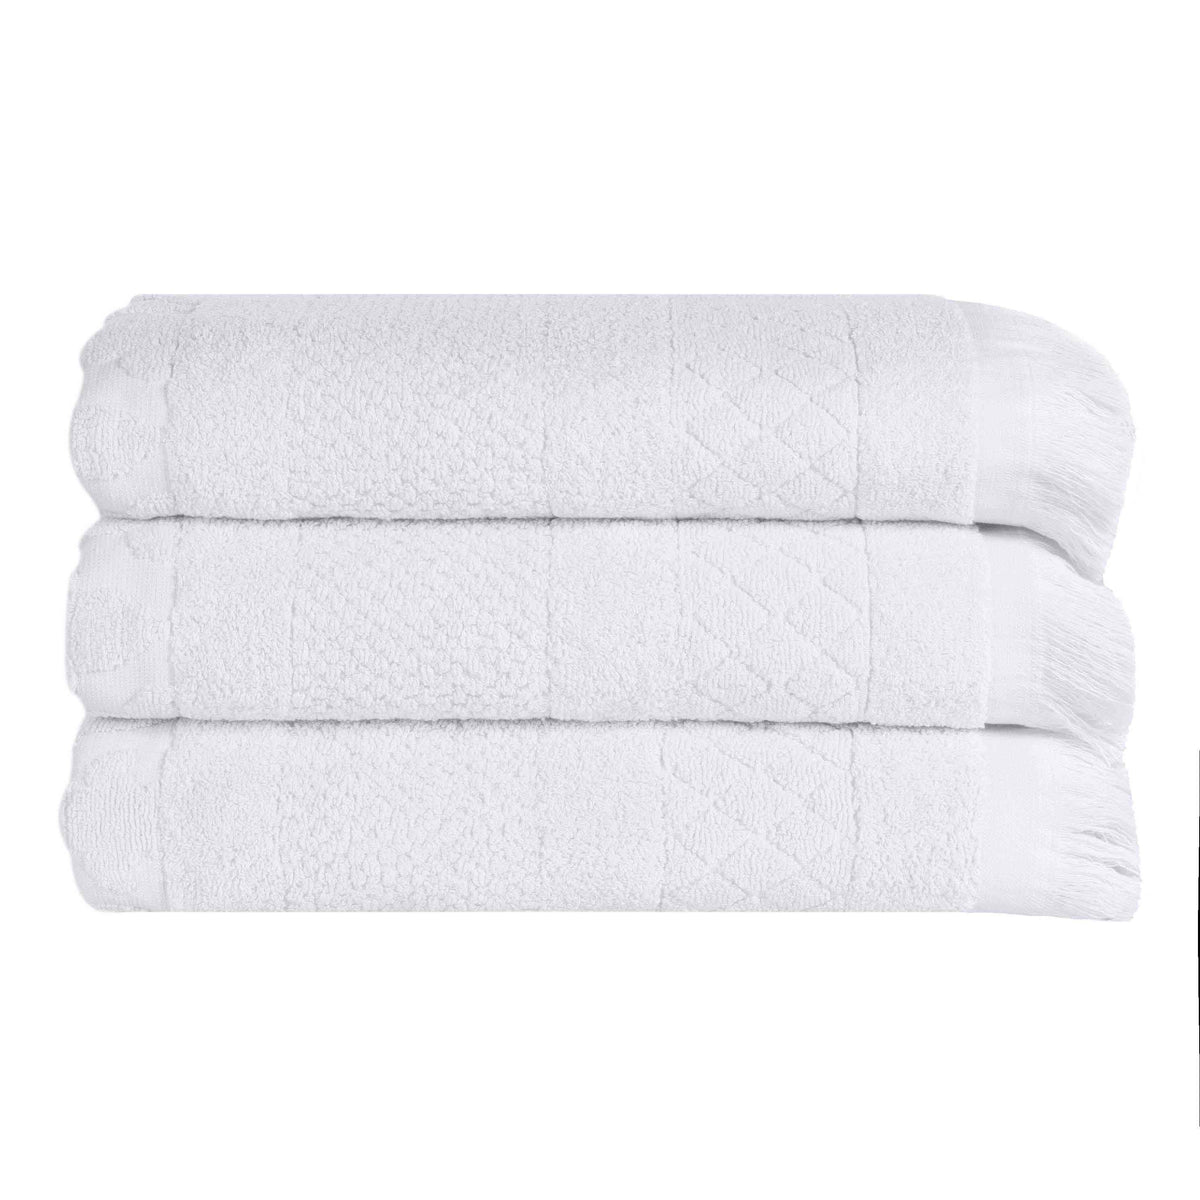 Rolla Cotton Geometric Jacquard Plush Absorbent Bath Towel - White